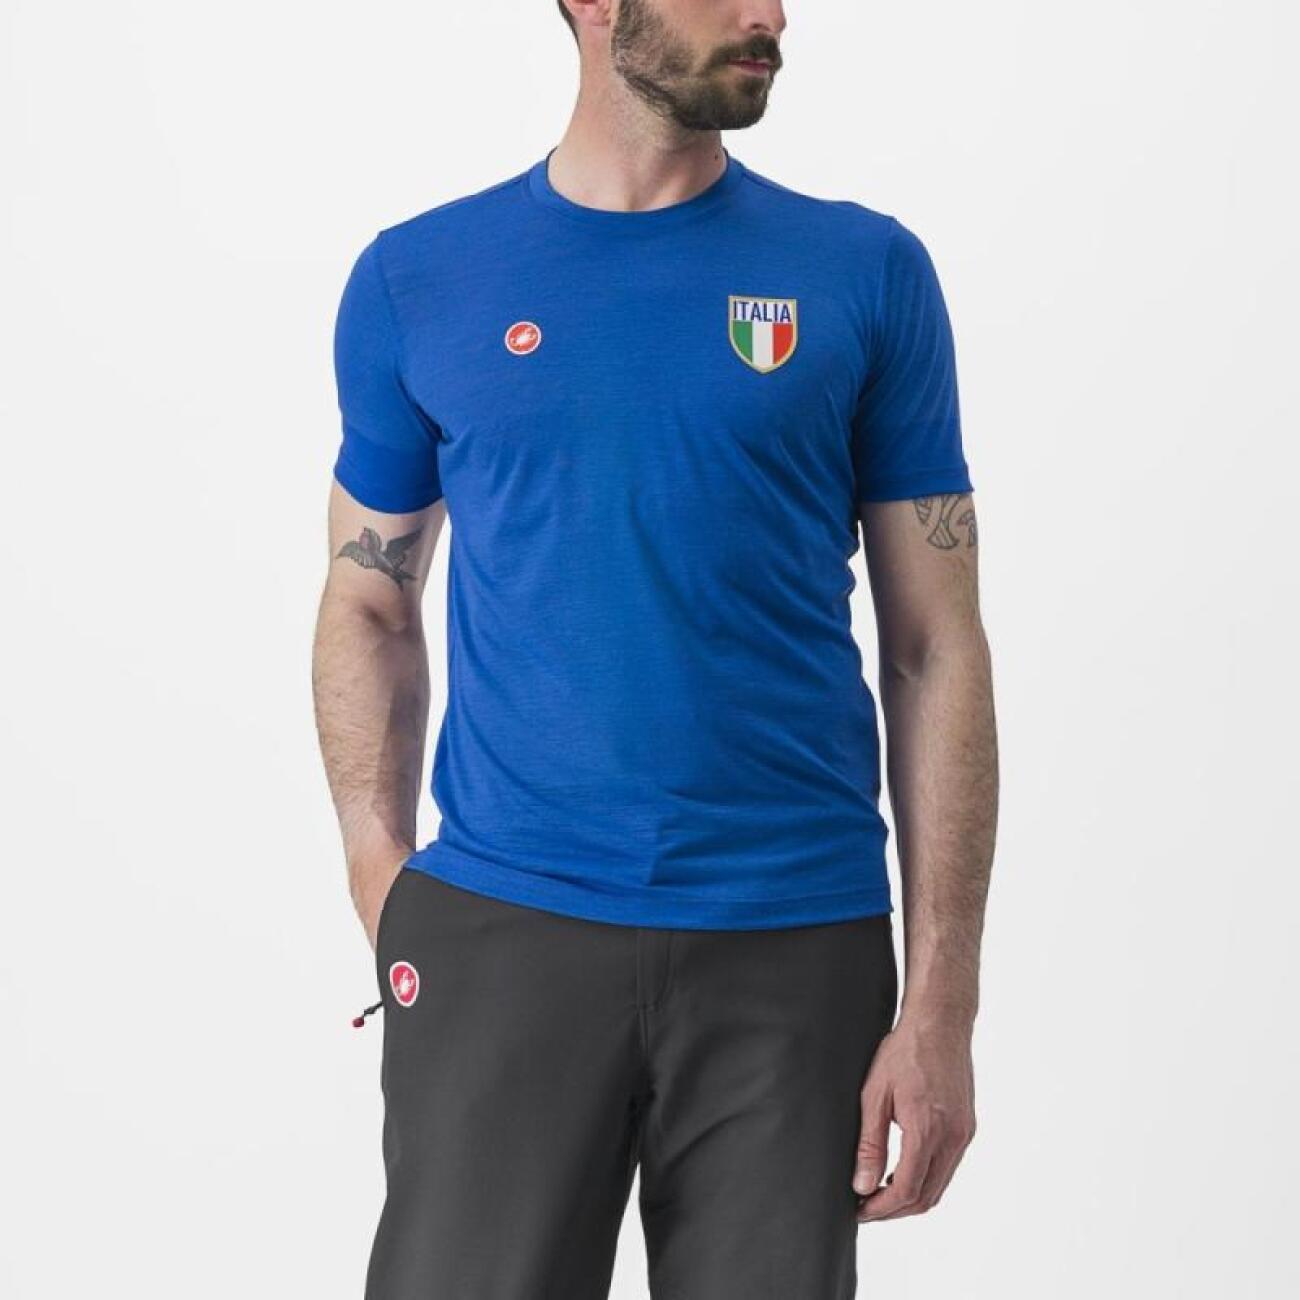 CASTELLI Cyklistické tričko s krátkym rukávom - ITALIA MERINO - modrá XL